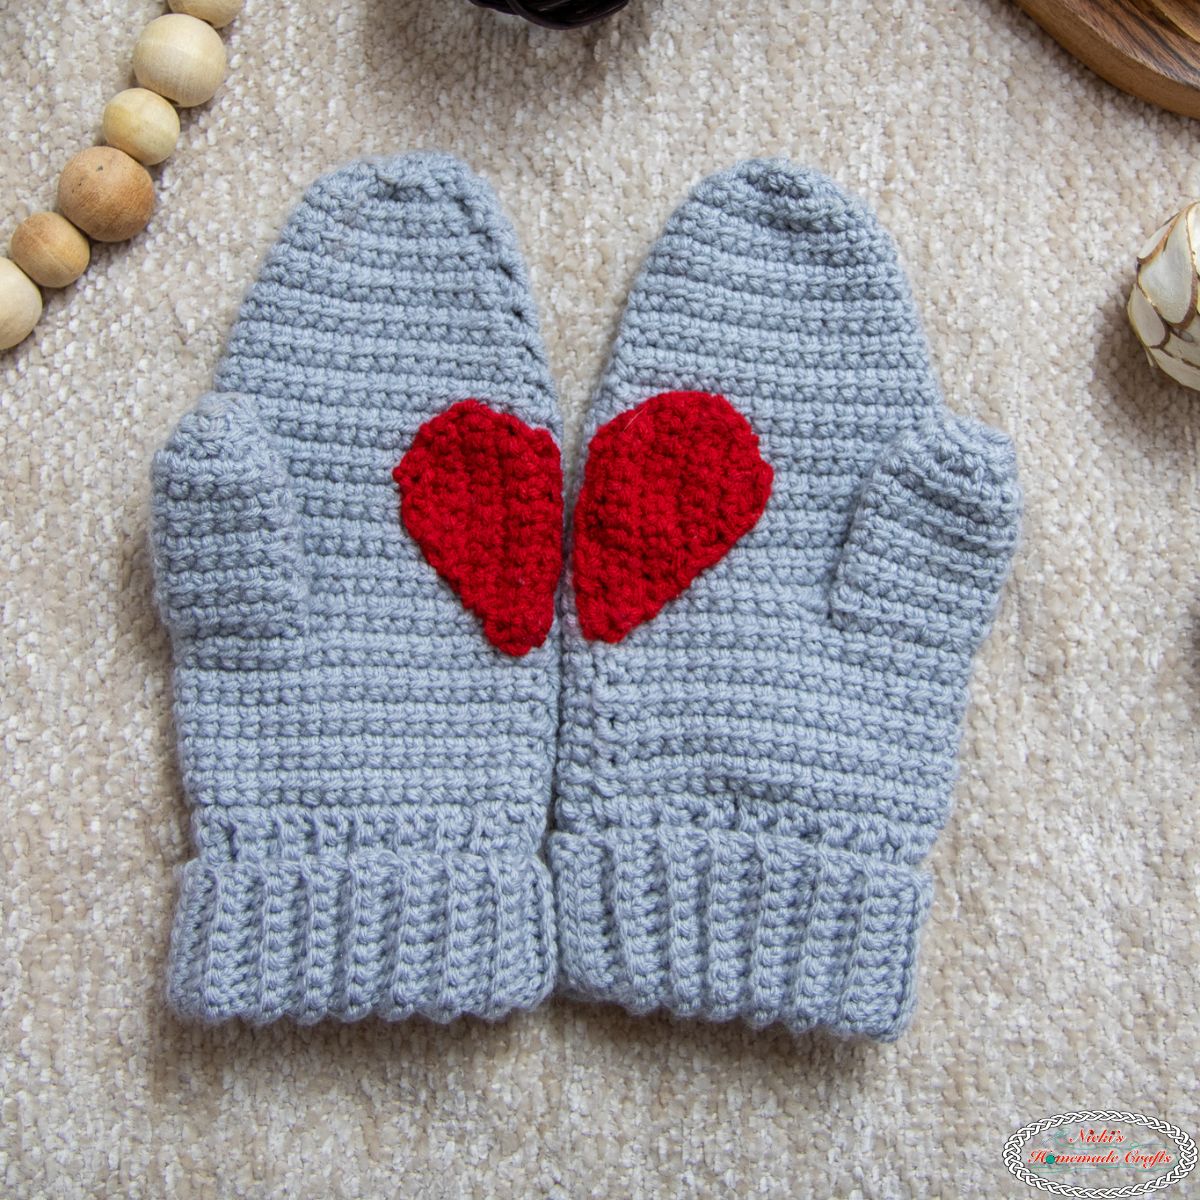 10 Stylish Free Crochet Gloves Patterns - Nicki's Homemade Crafts